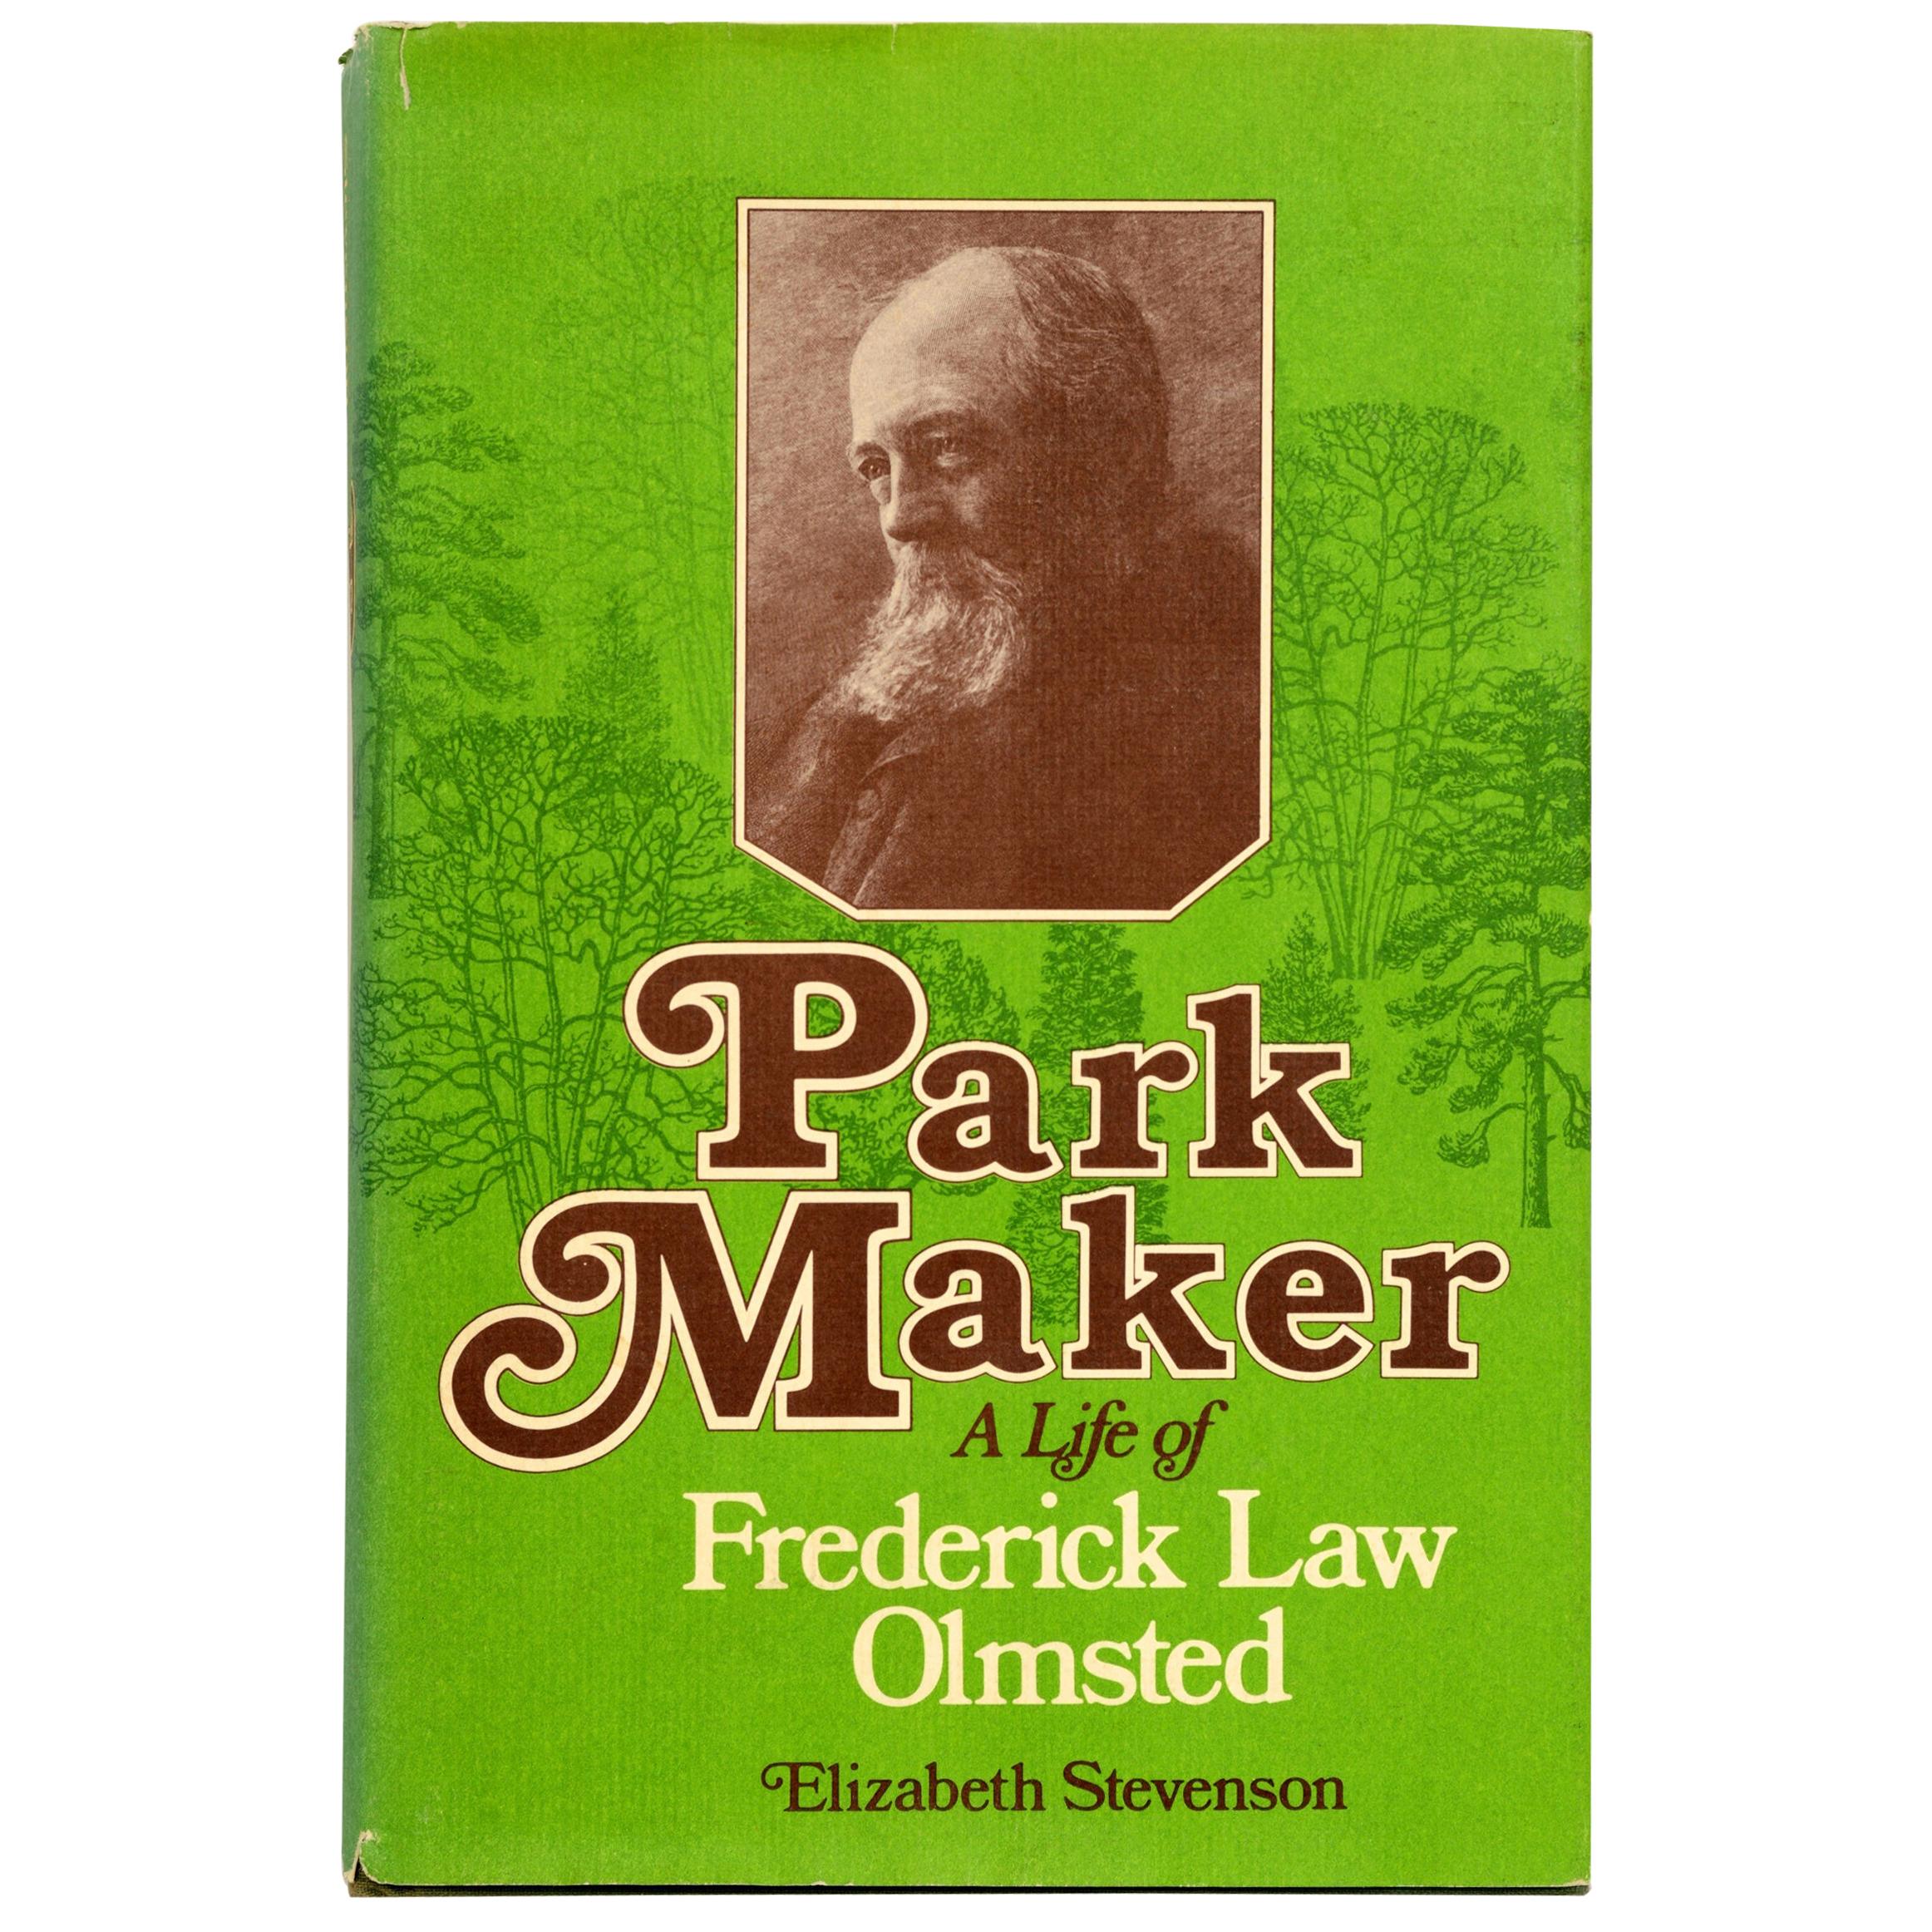 Park Maker Life of Frederick Law Olmsted by Elizabeth Stevenson, 1st Printing